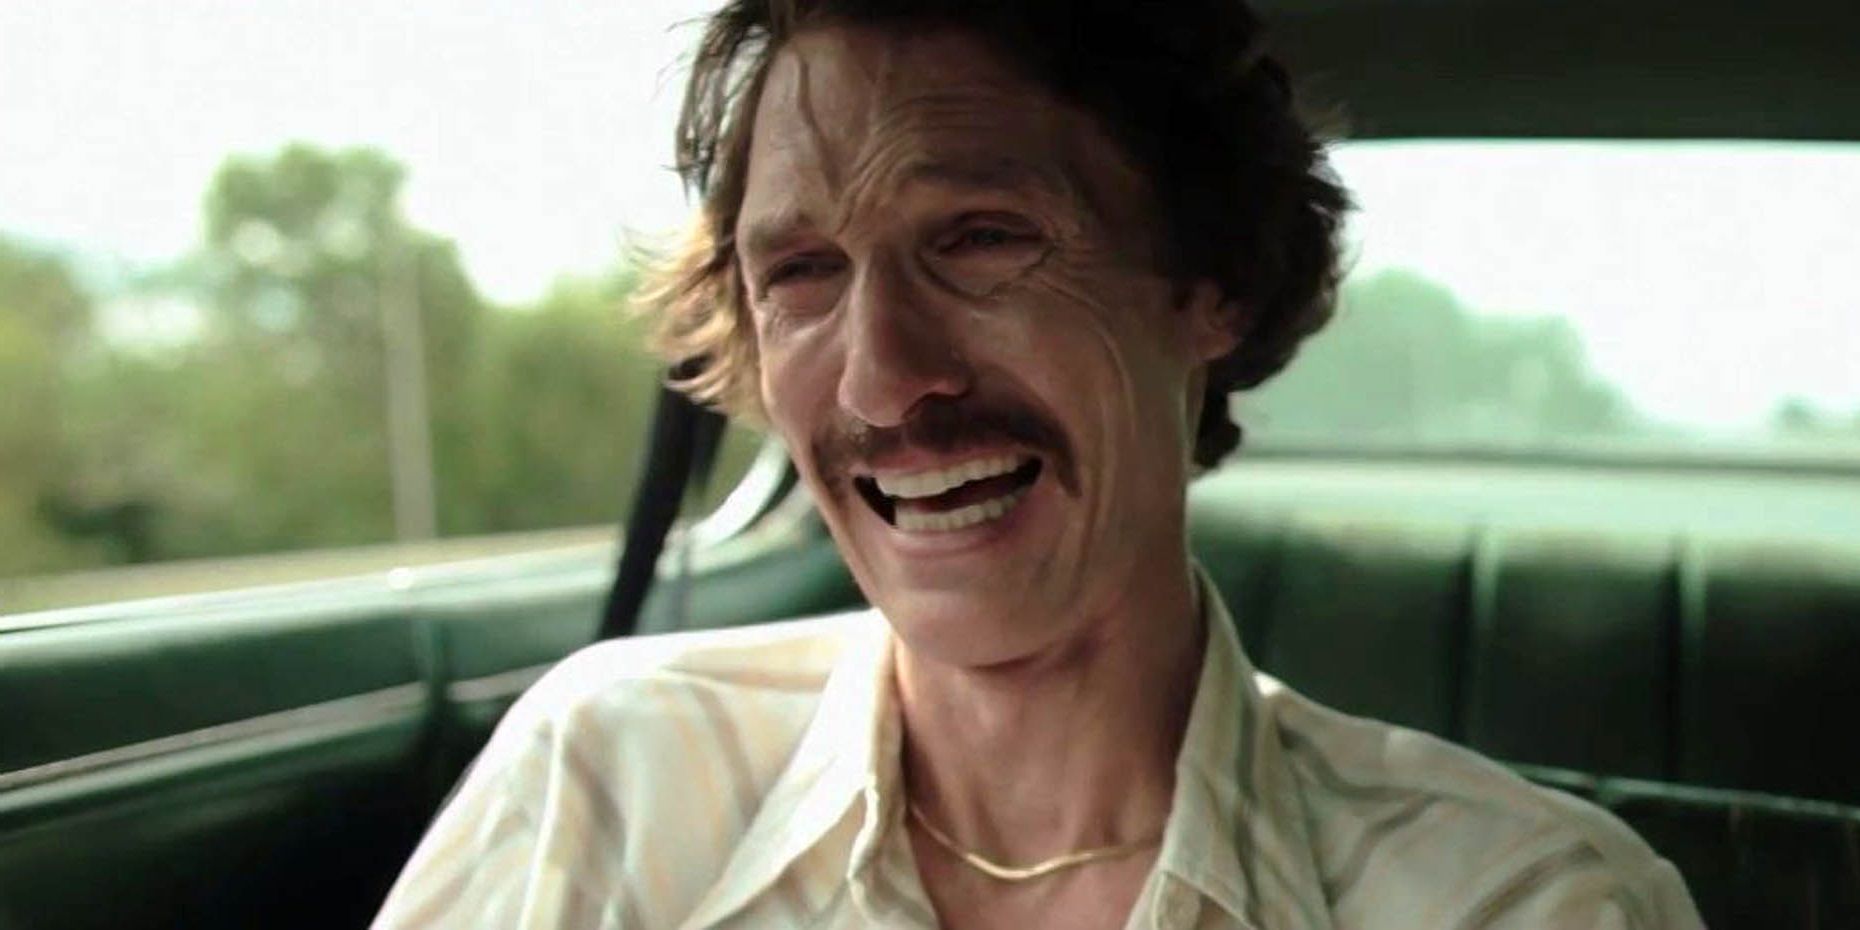 Matthew McConaughey as Ron Woodroof in Dallas Buyers Club